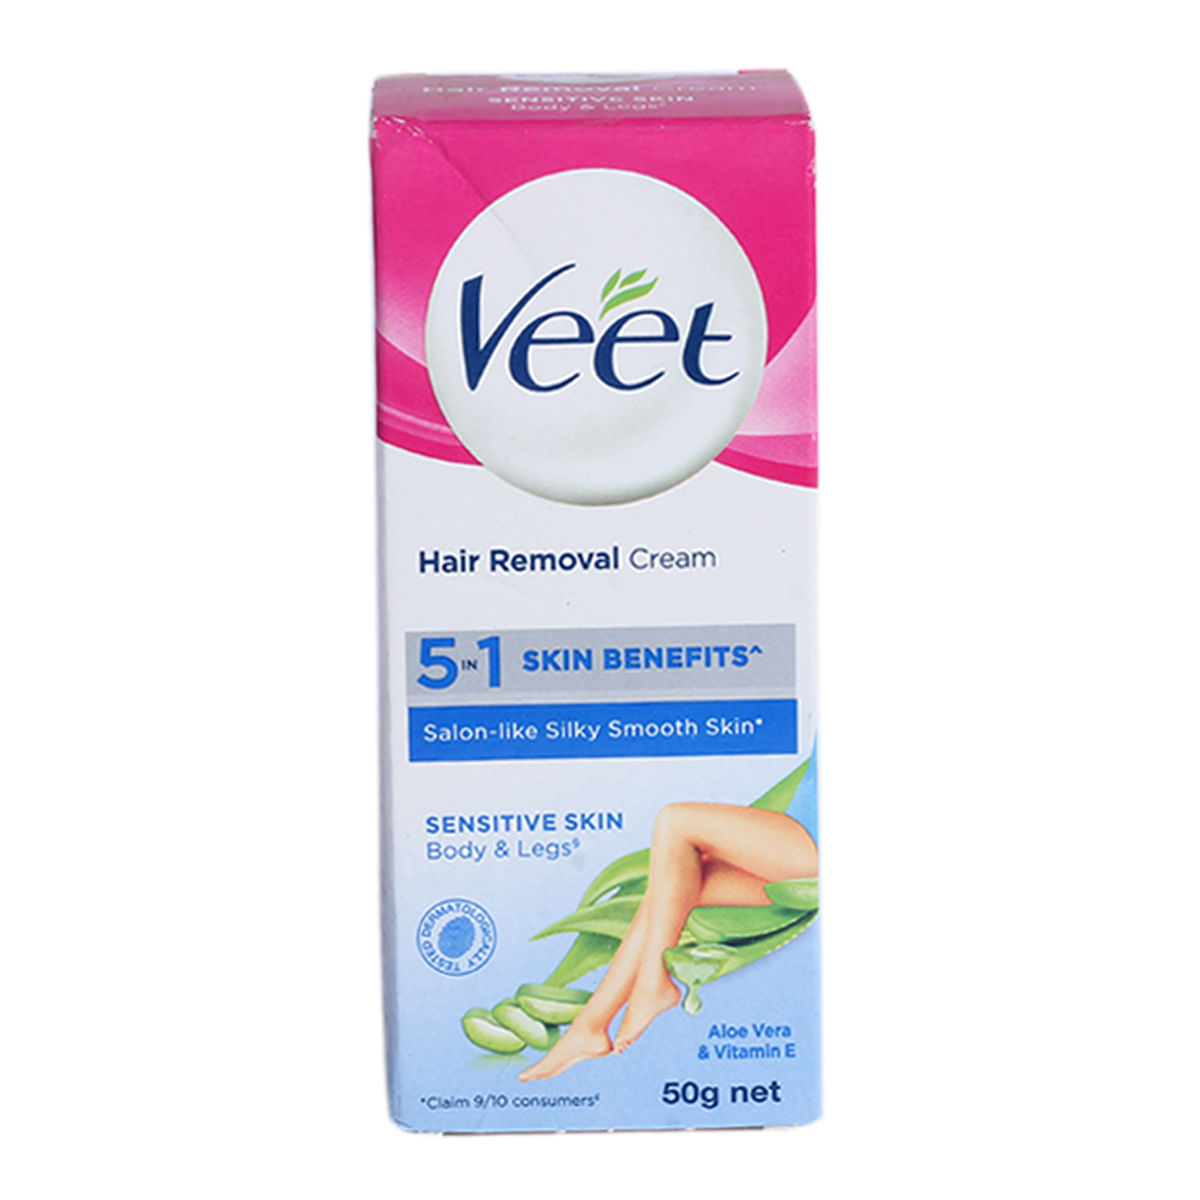 Buy Veet 5 in 1 Skin Benefits Hair Removal Cream For Sensitive Skin, 25 gm Online